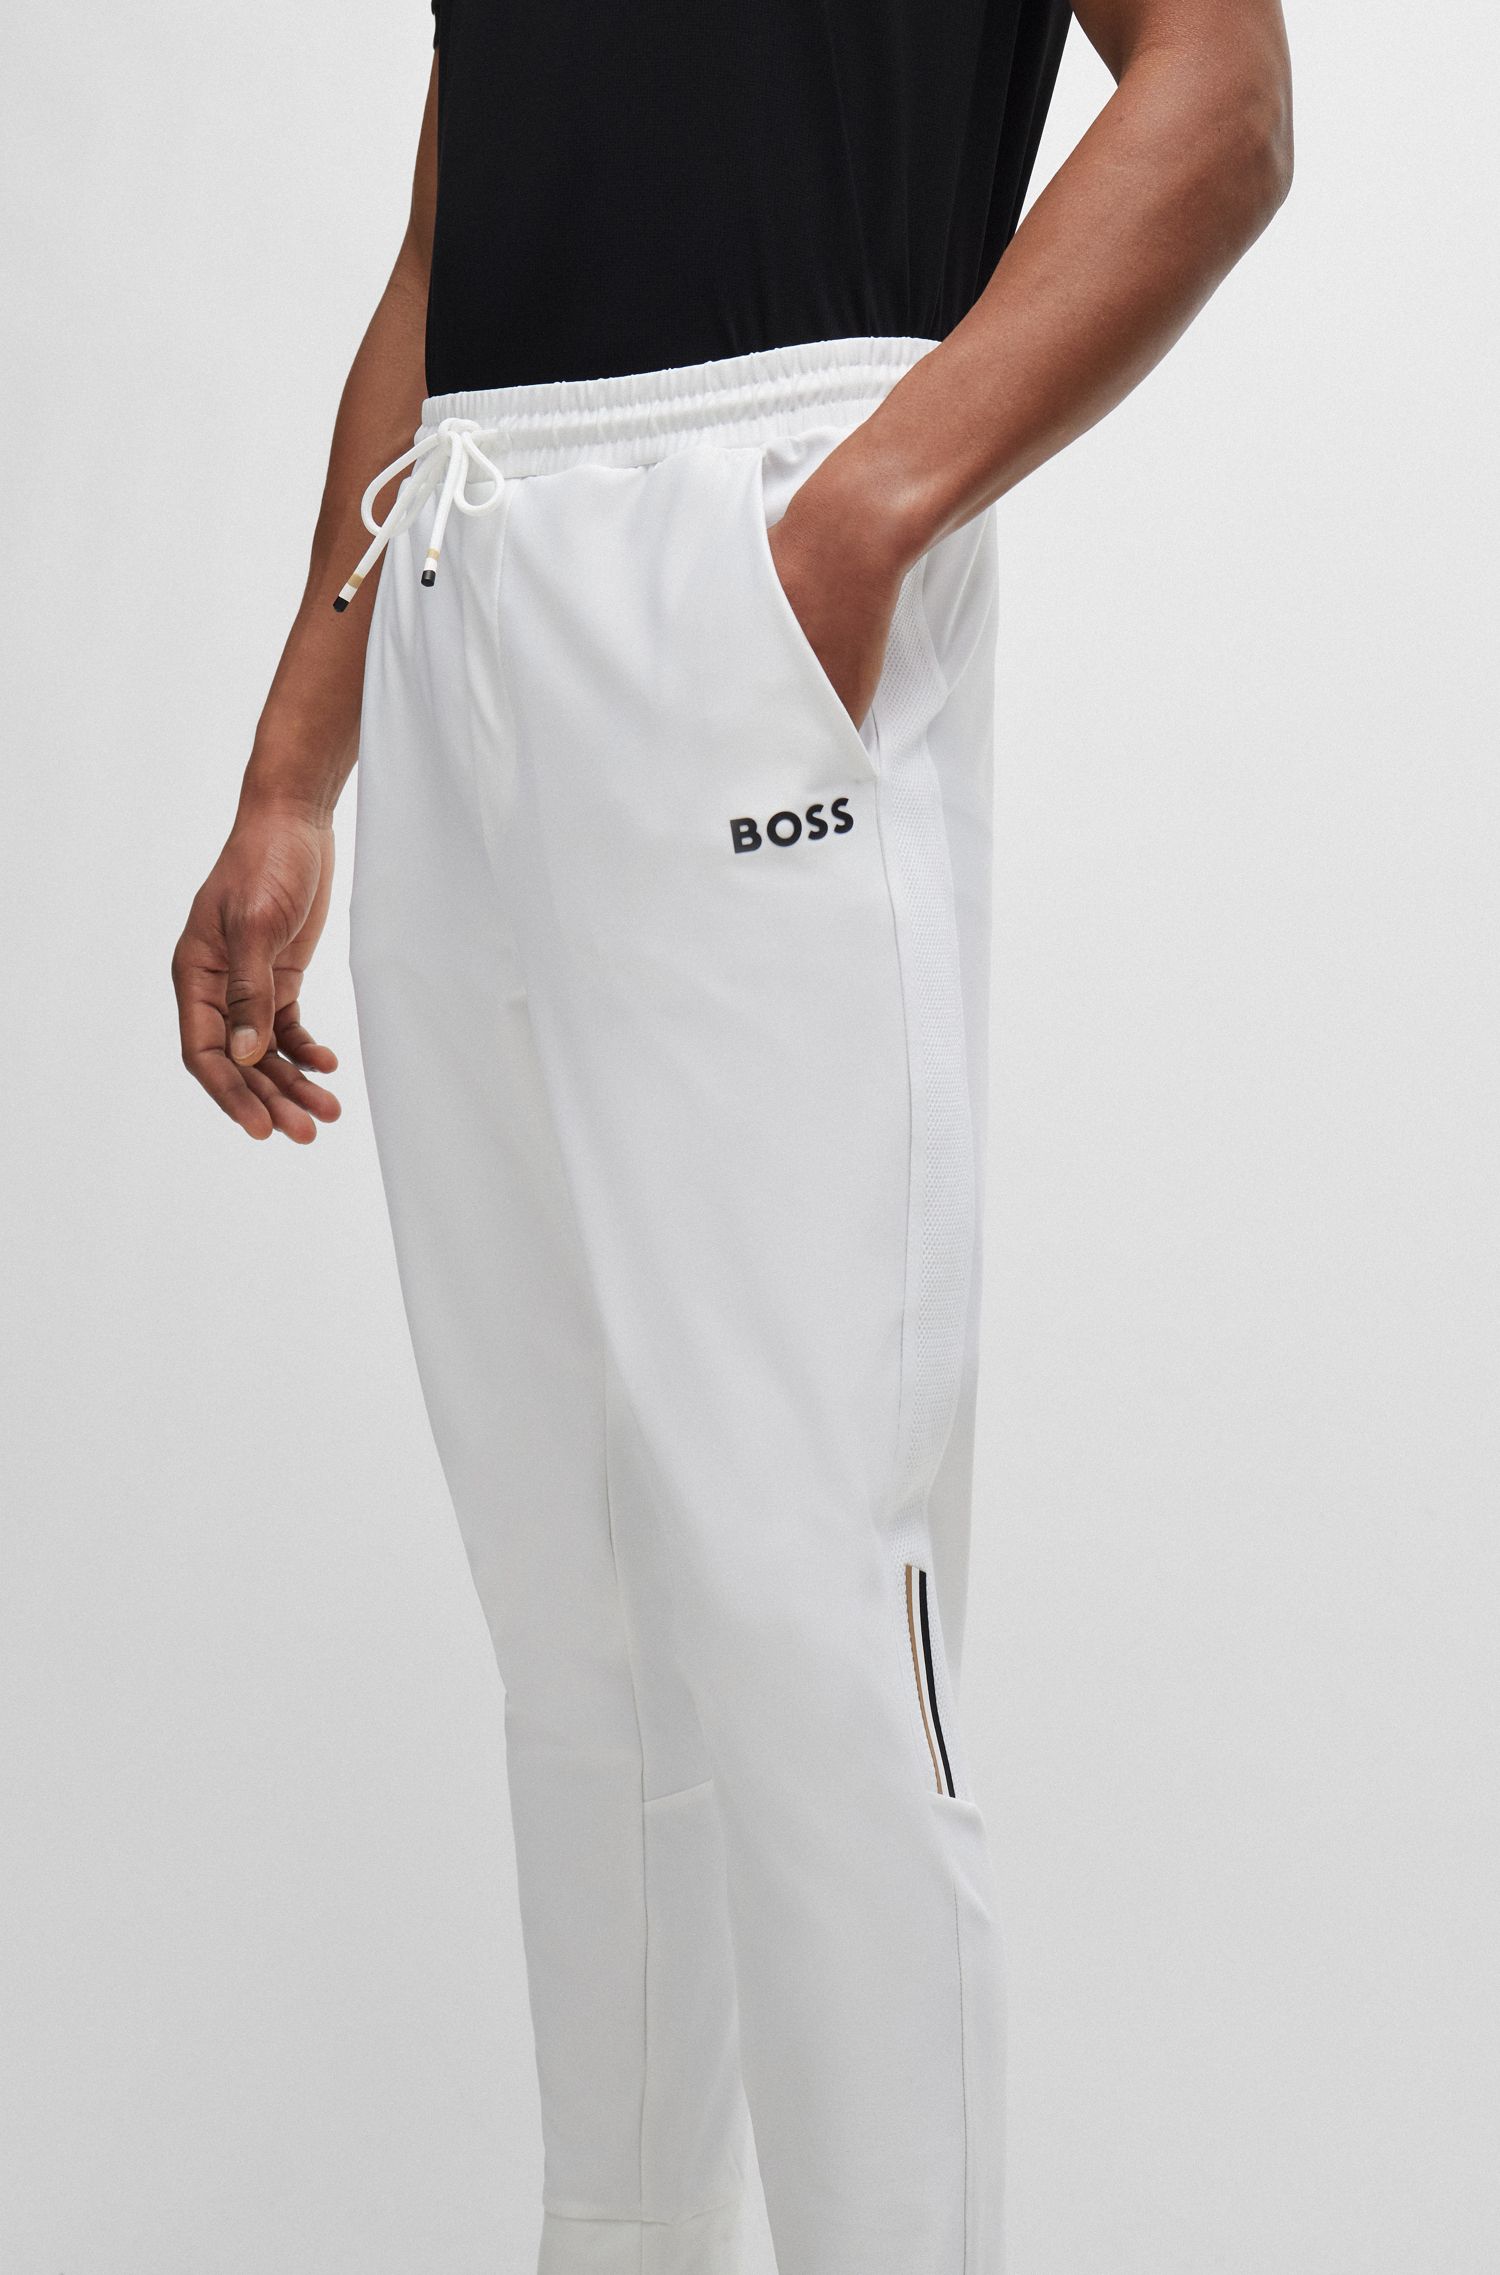 BOSS x Matteo Berrettini 撞色饰带和品牌标识装饰运动裤